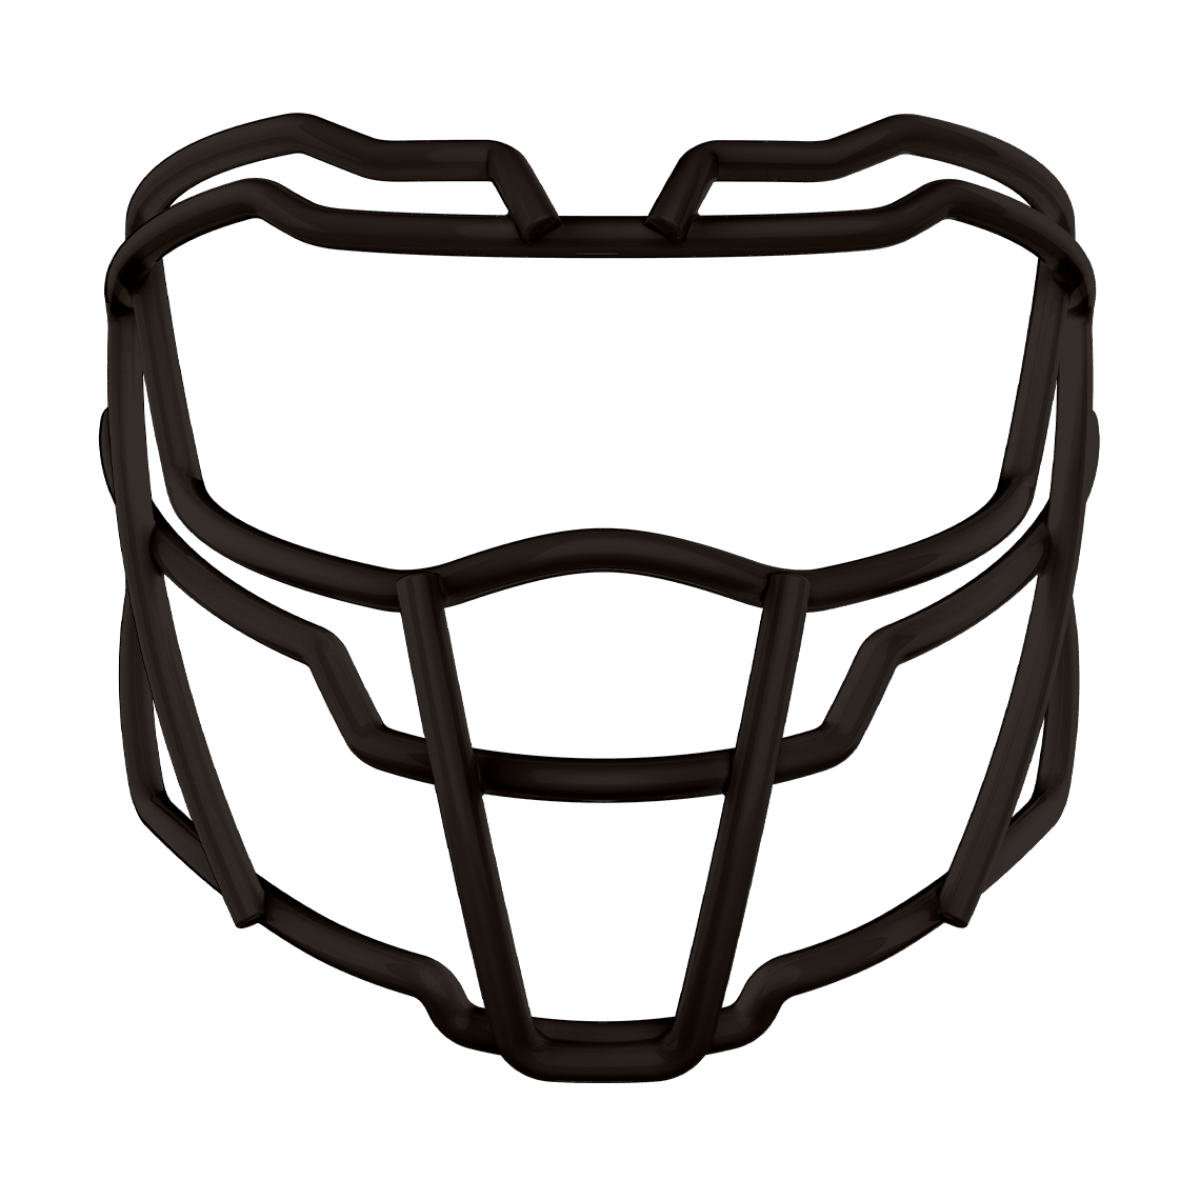 Black Precept face mask for football helmet.